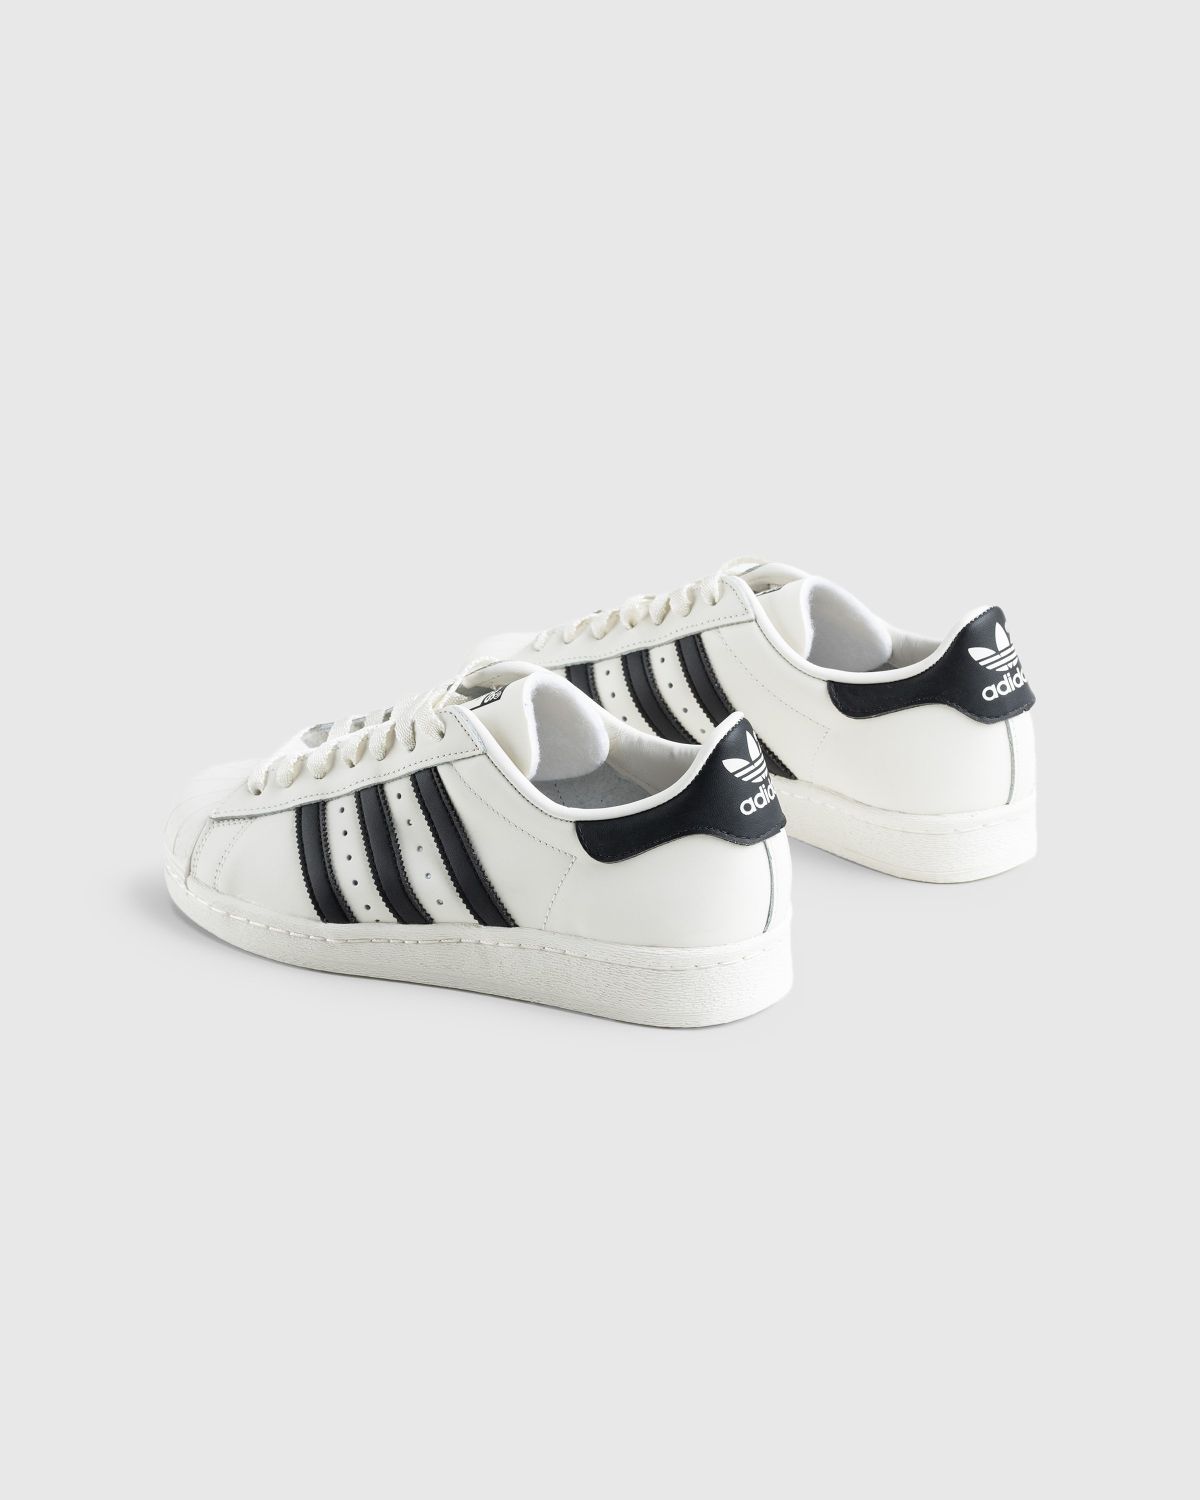 Adidas – Superstar 82 White/Black - Sneakers - White - Image 4